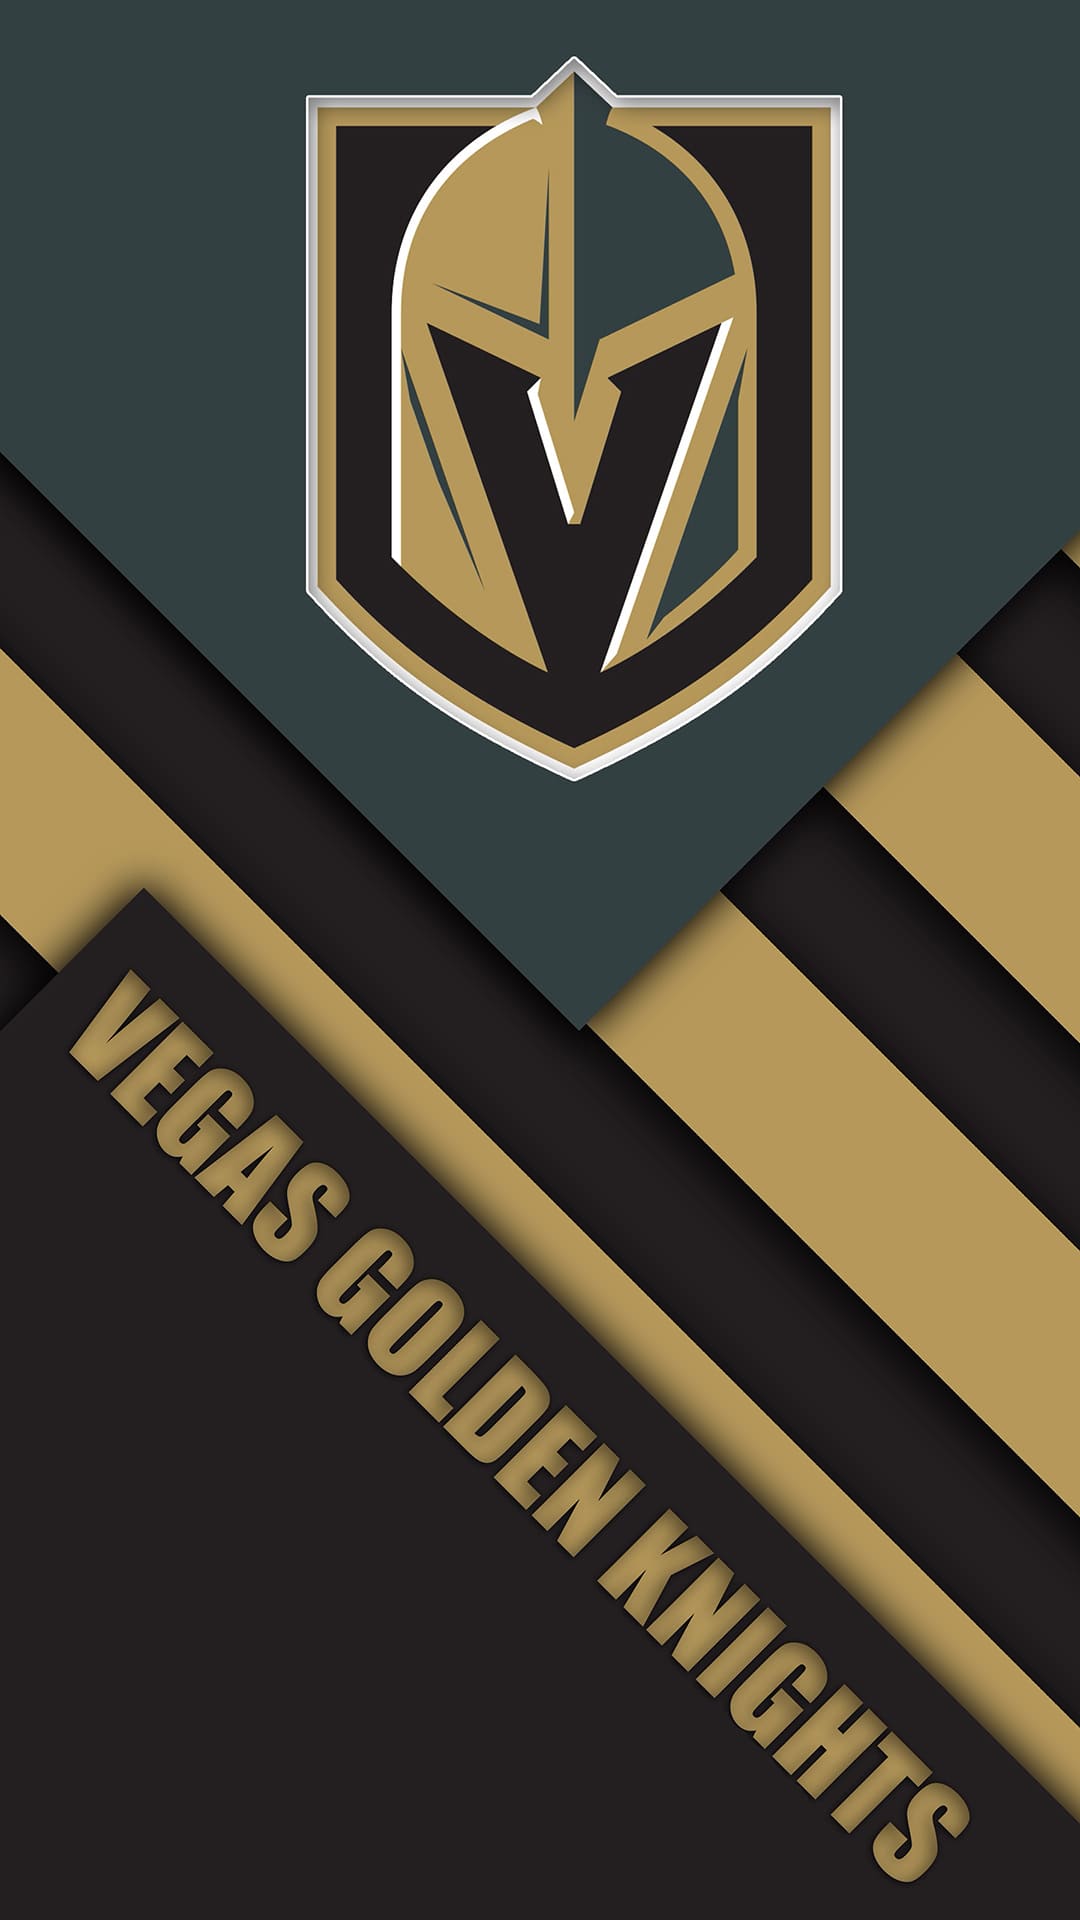 Vegas Golden Knights Wallpapers